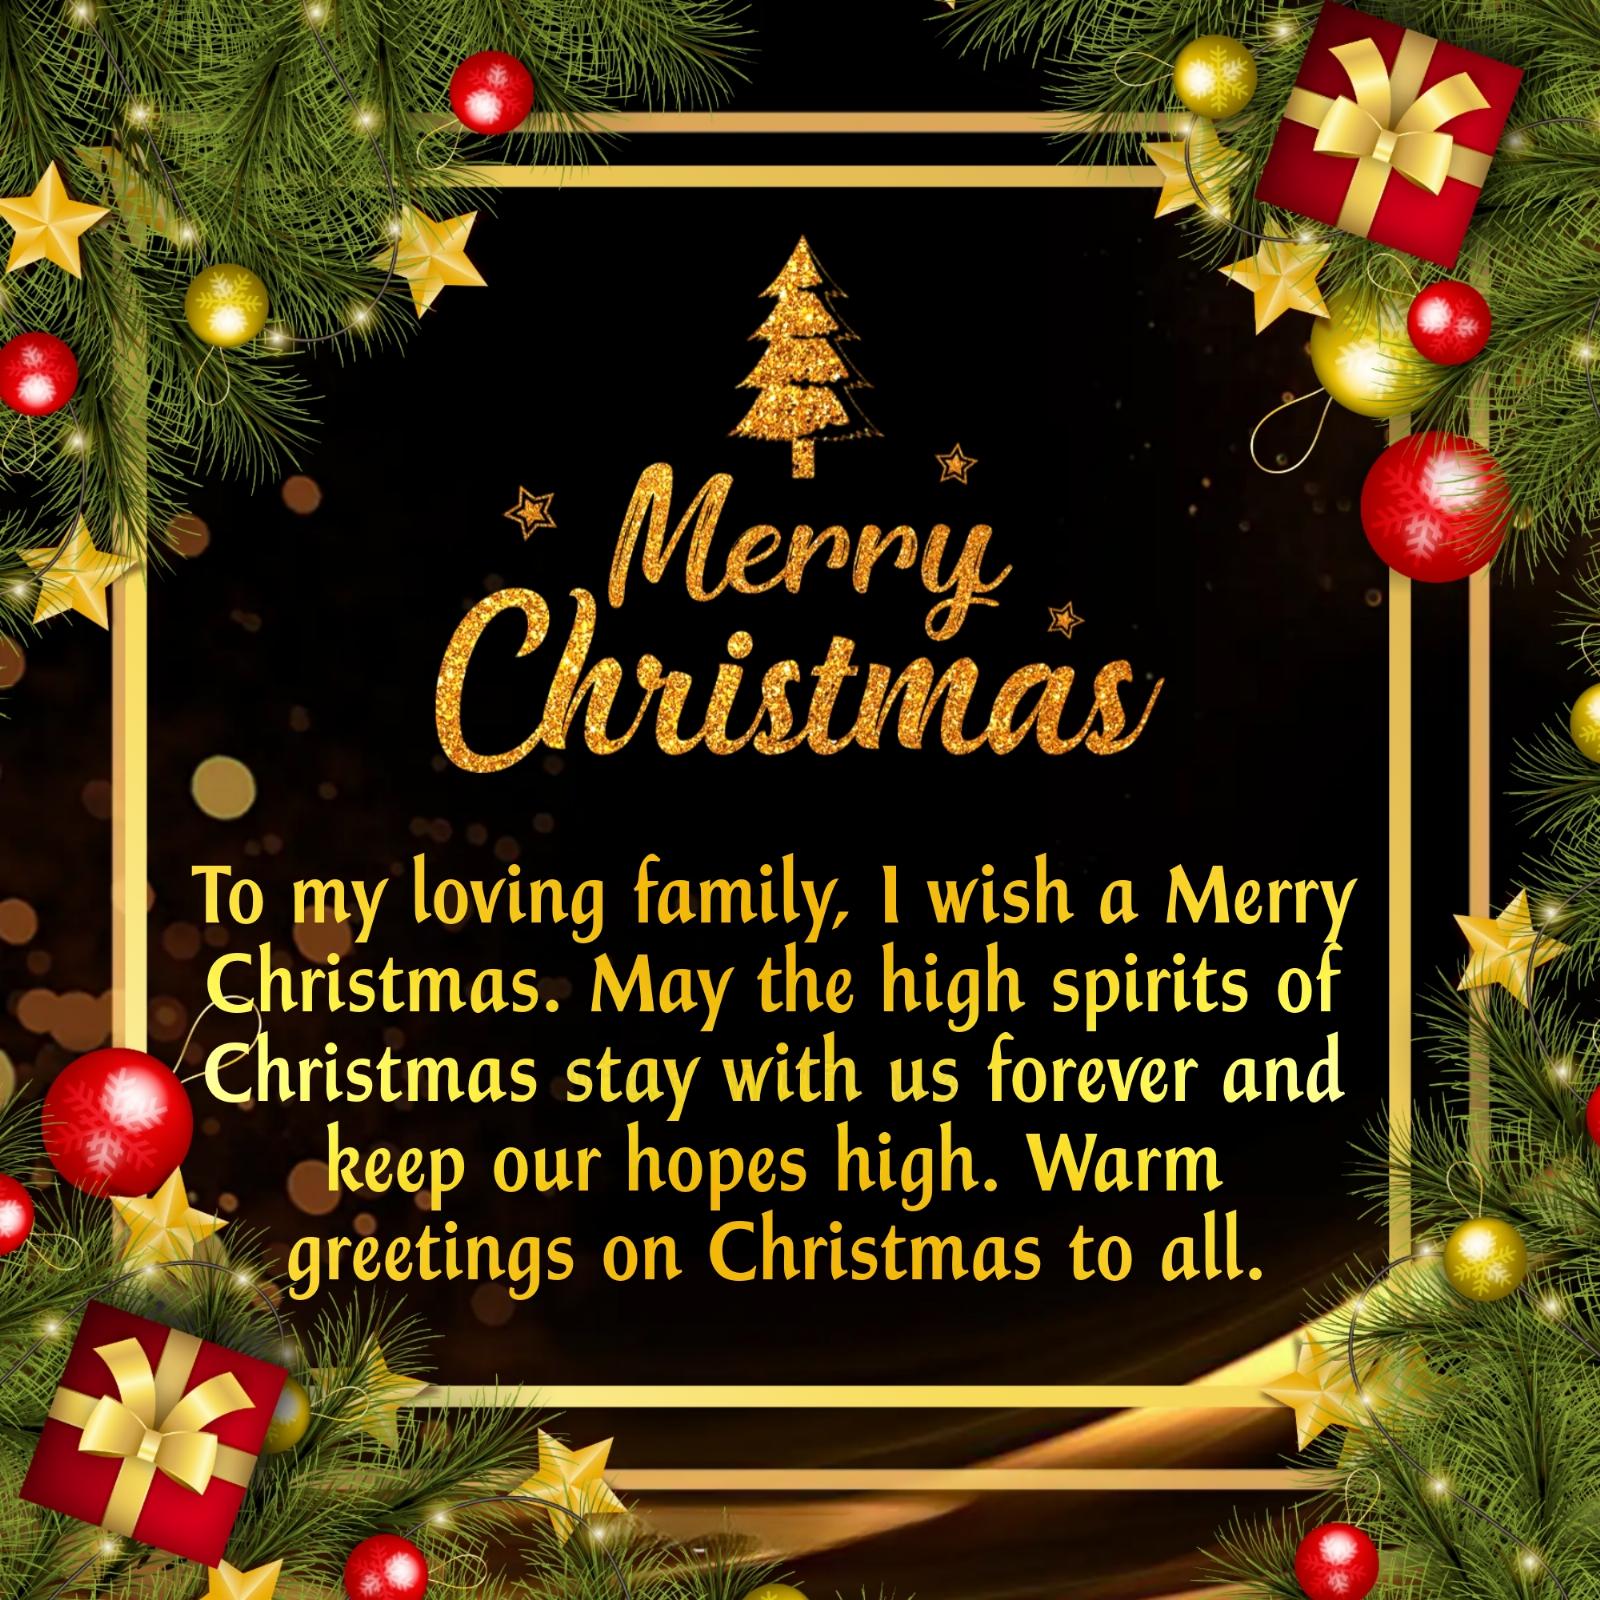 To my loving family I wish a Merry Christmas